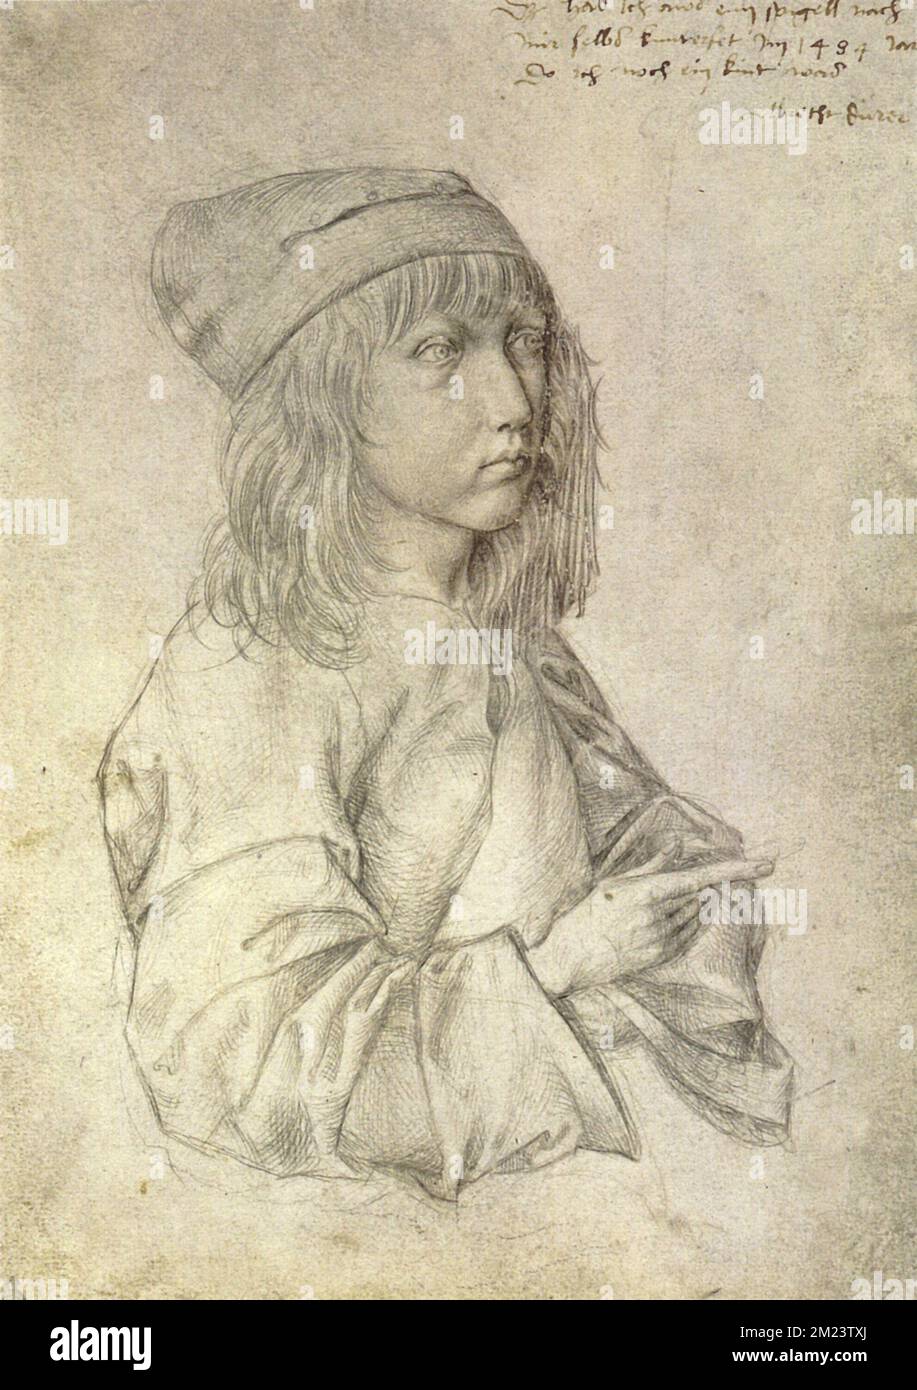 Albrecht Dürer, autoritratto silverpoint disegno del tredicenne Dürer, 1484. Albrecht Dürer Foto Stock